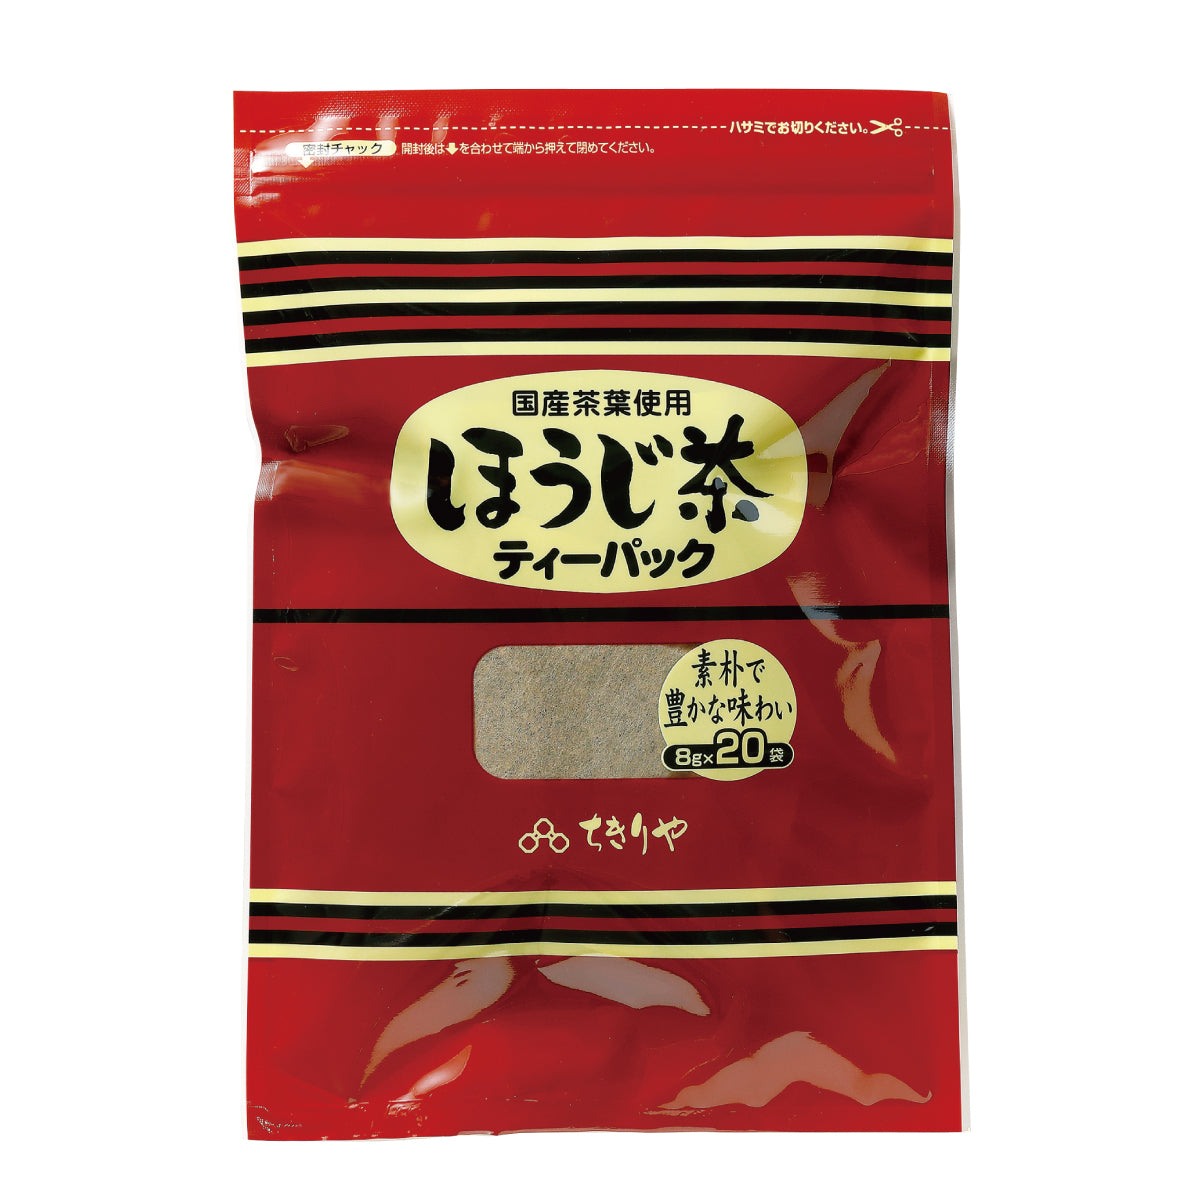 Hojicha (roasted Japanese green tea) - 8g x 20 Tea bags